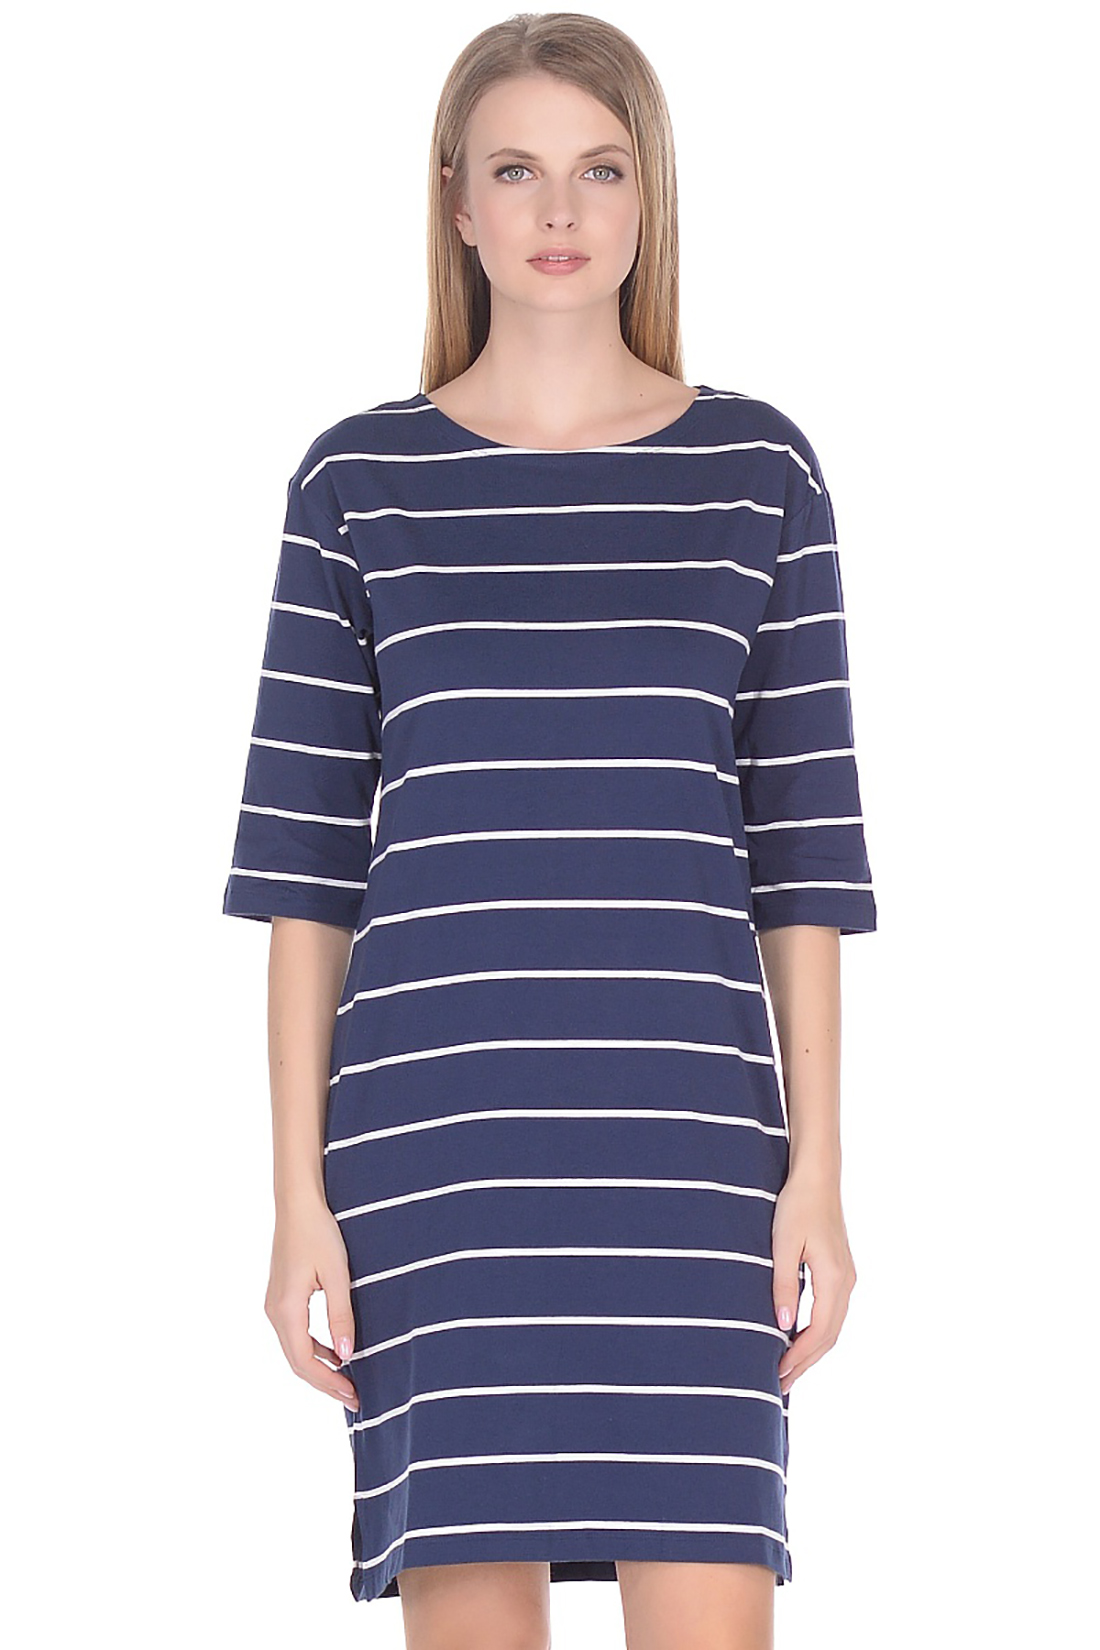 Платье из трикотажа в полоску (арт. baon B458046), размер 3XL, цвет dark navy striped#синий Платье из трикотажа в полоску (арт. baon B458046) - фото 3